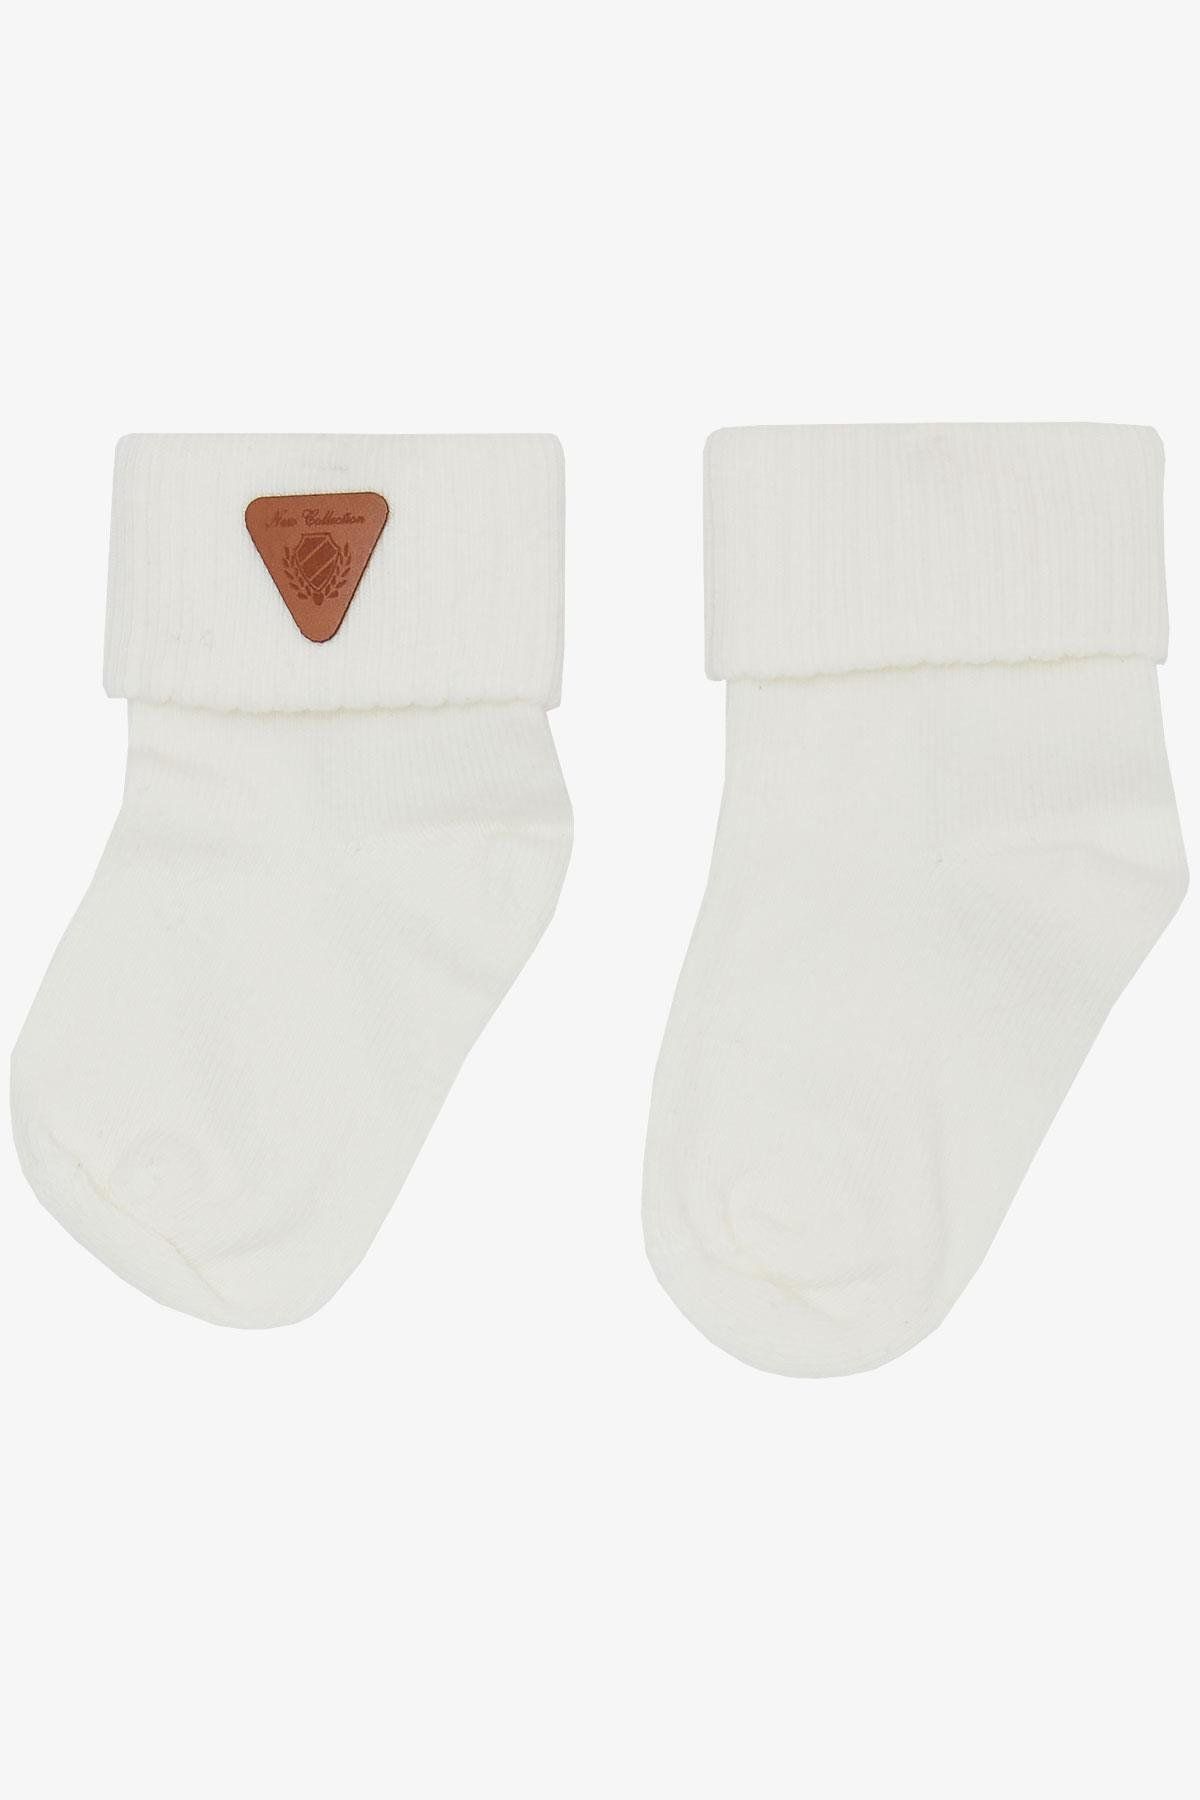 Katamino Erkek Bebek Soket Çorap Armalı 0-18 Ay, Ekru